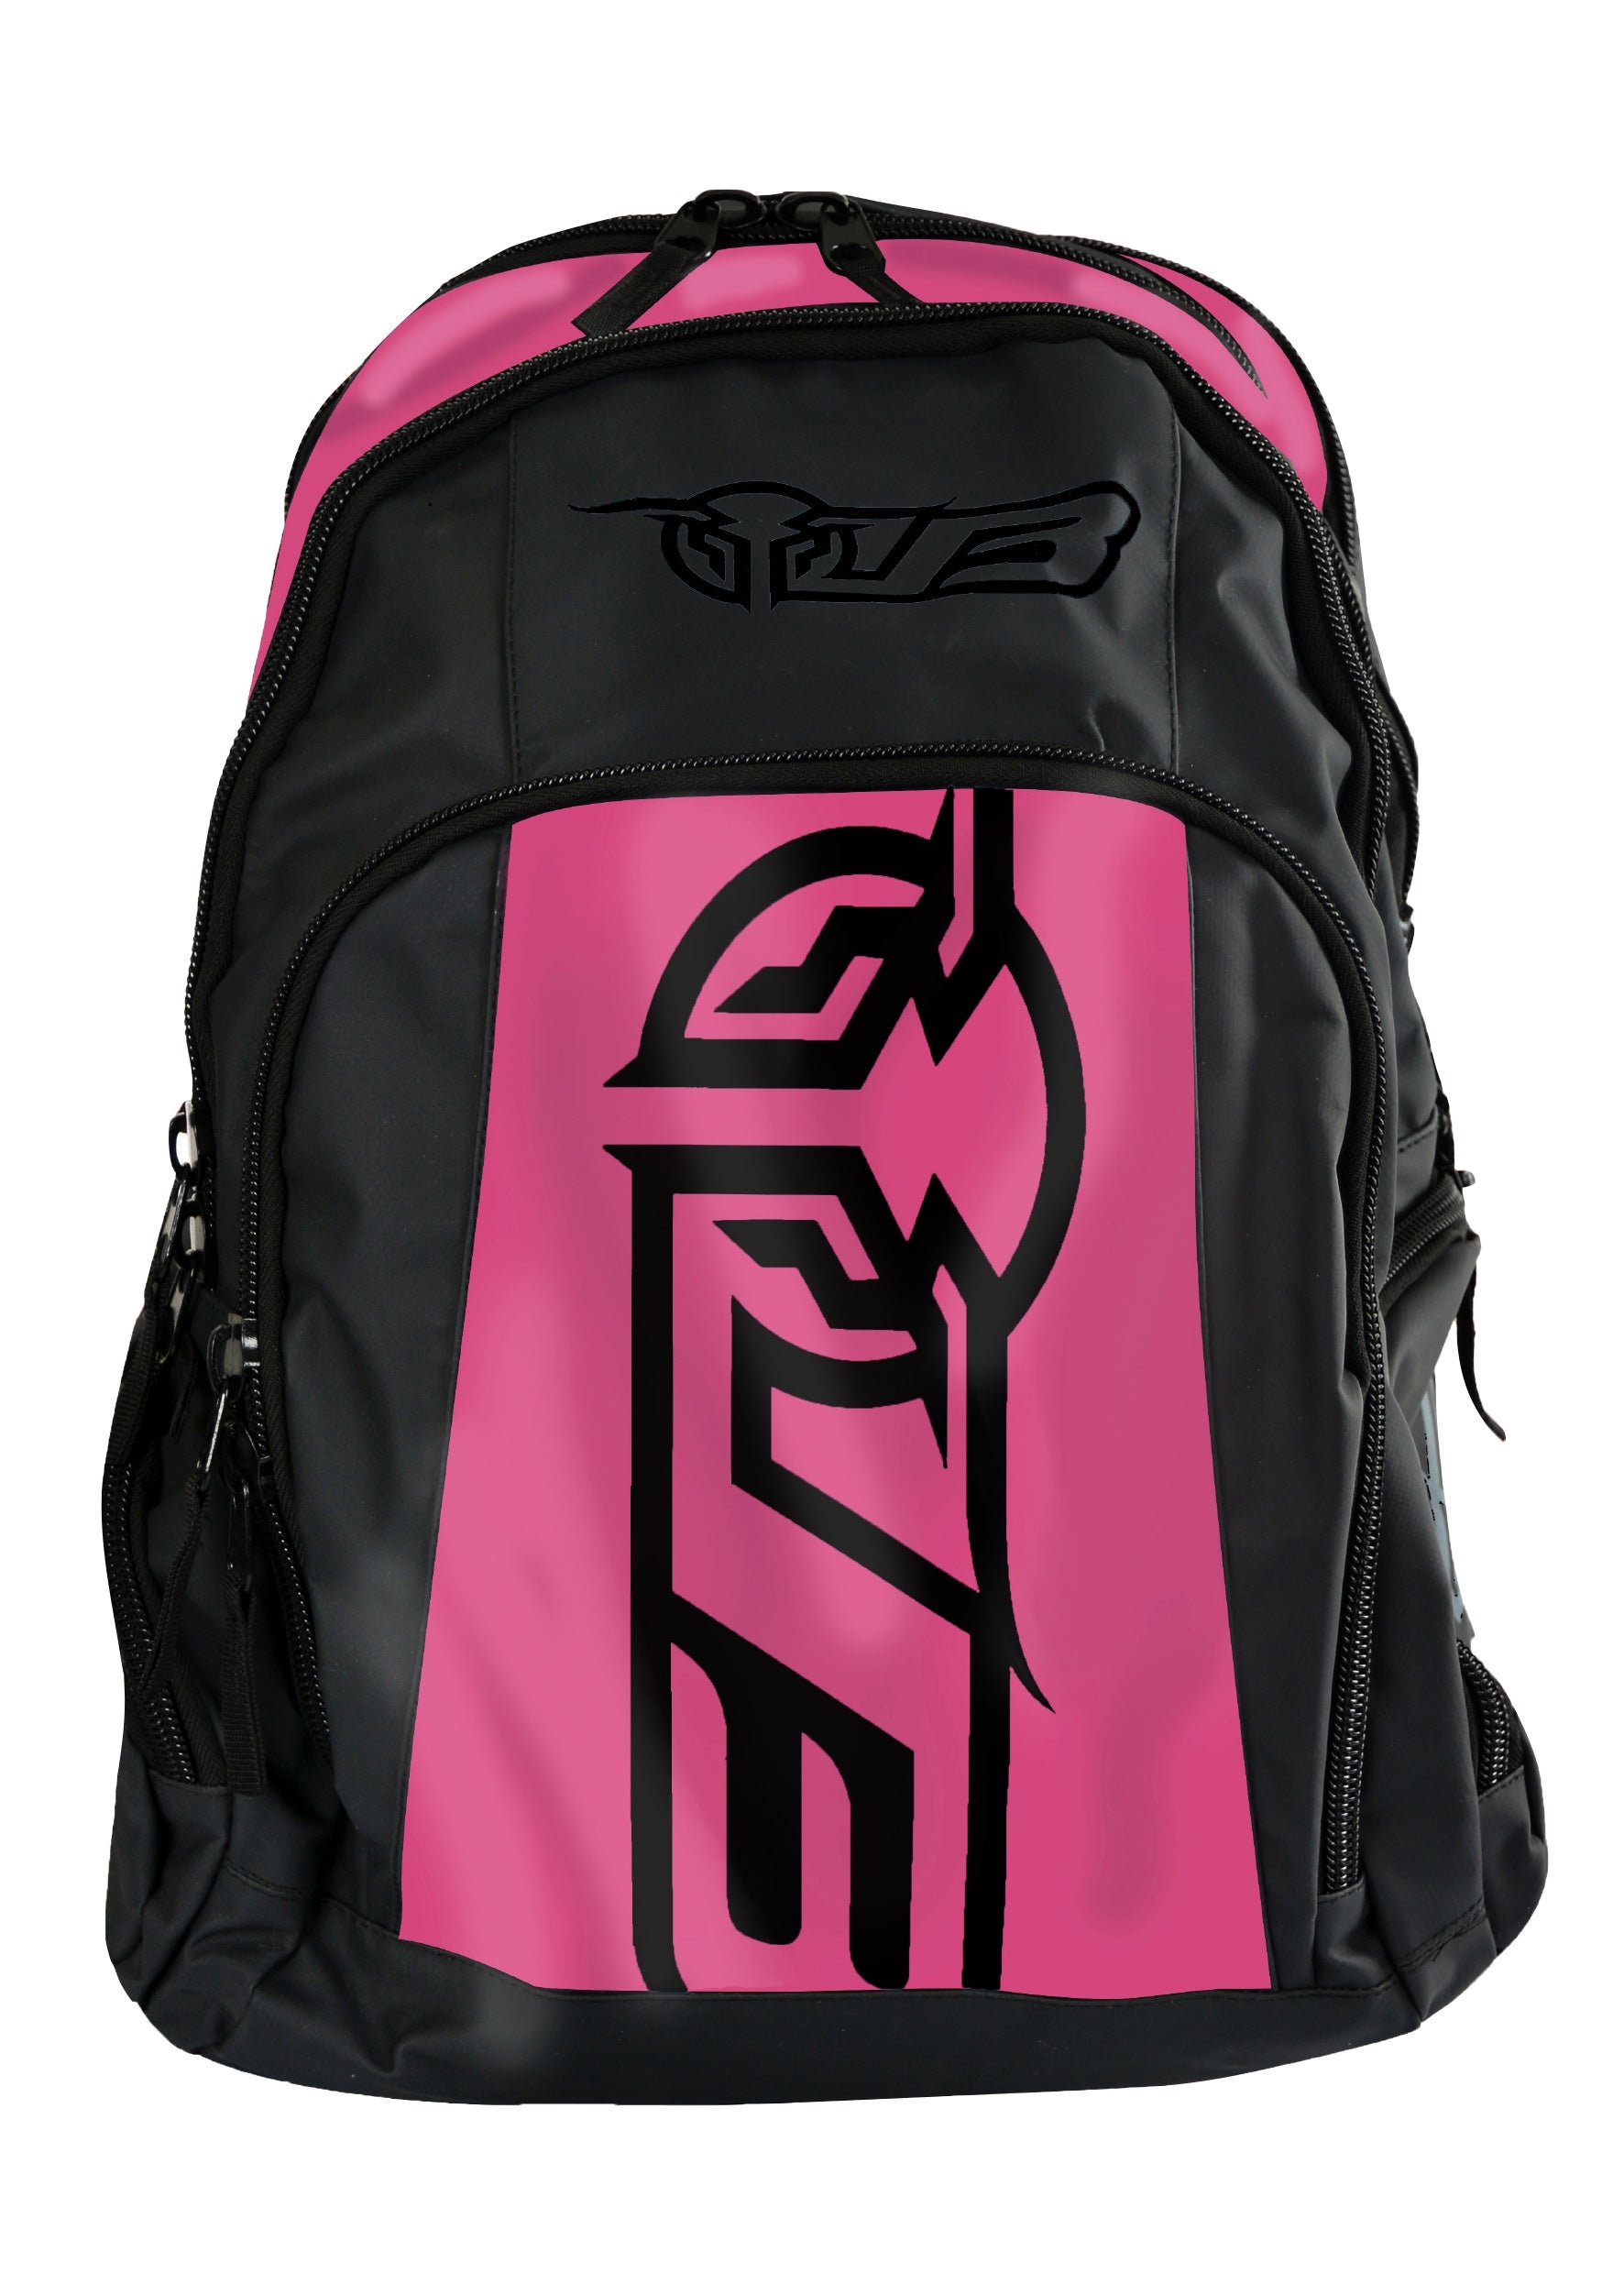 Bullzye Dozer Backpack S20 (4870793265229)